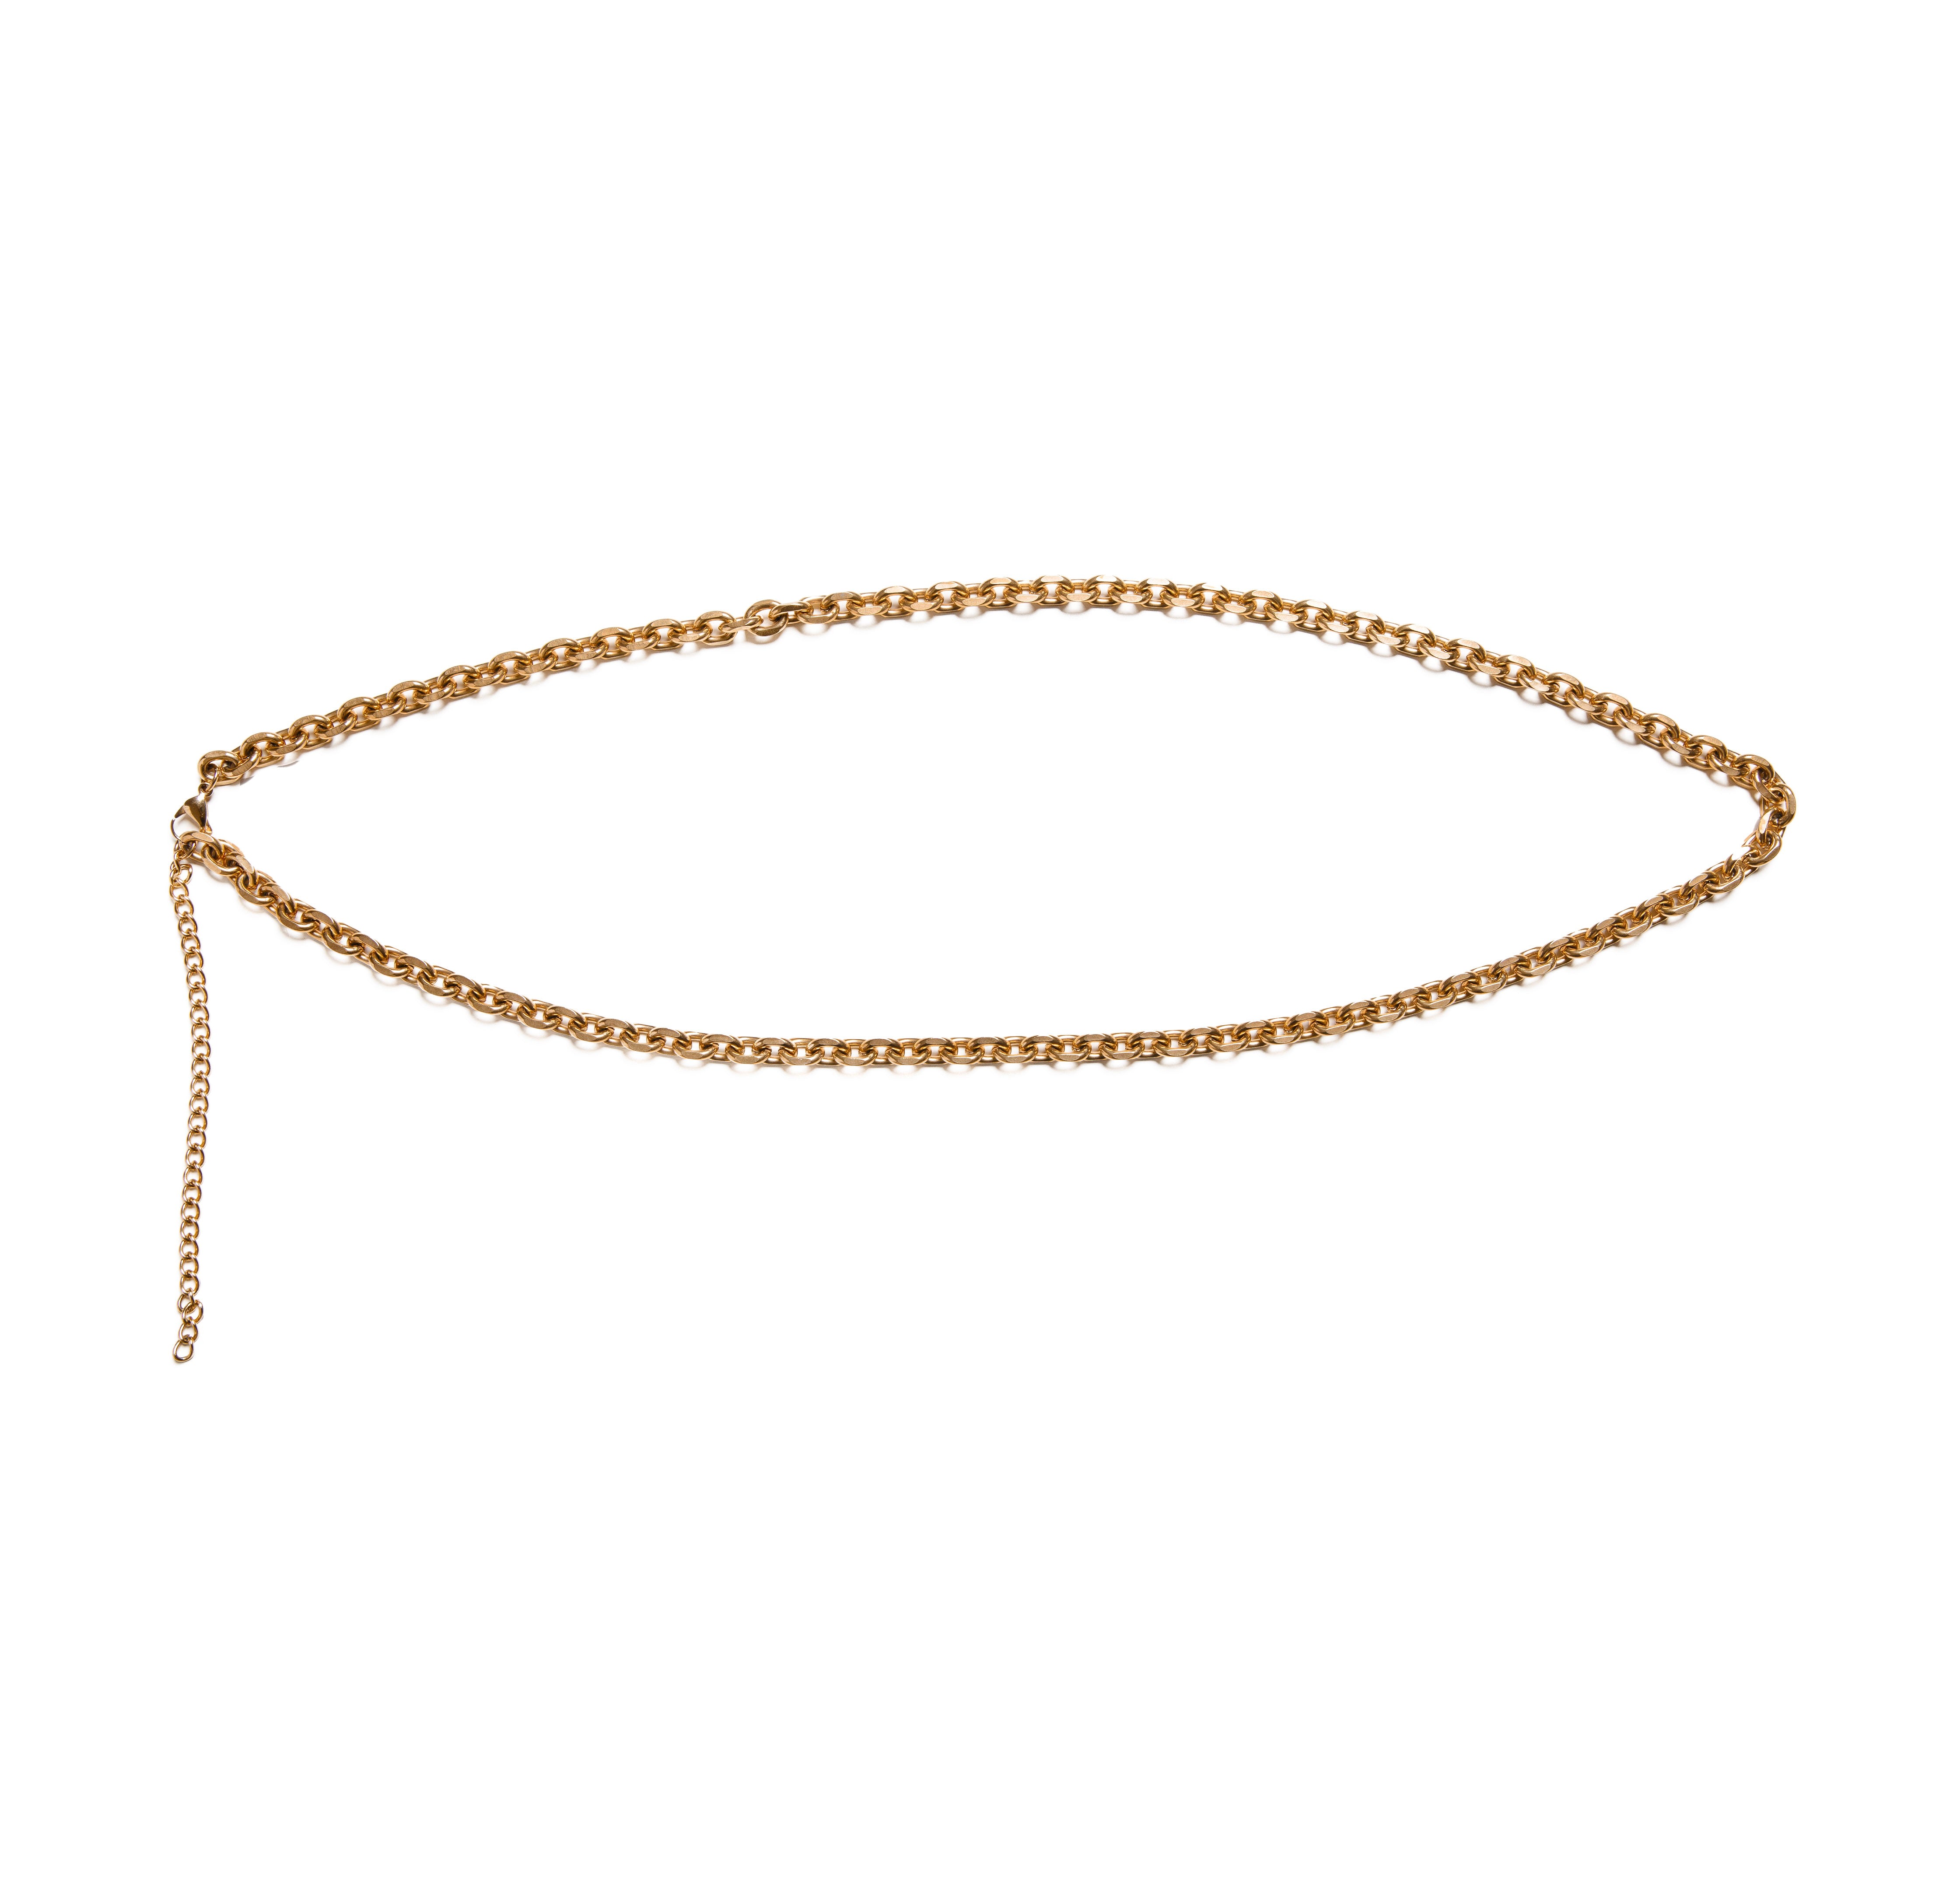 Tseatjewelry Women's Gold Merci Chain Belt